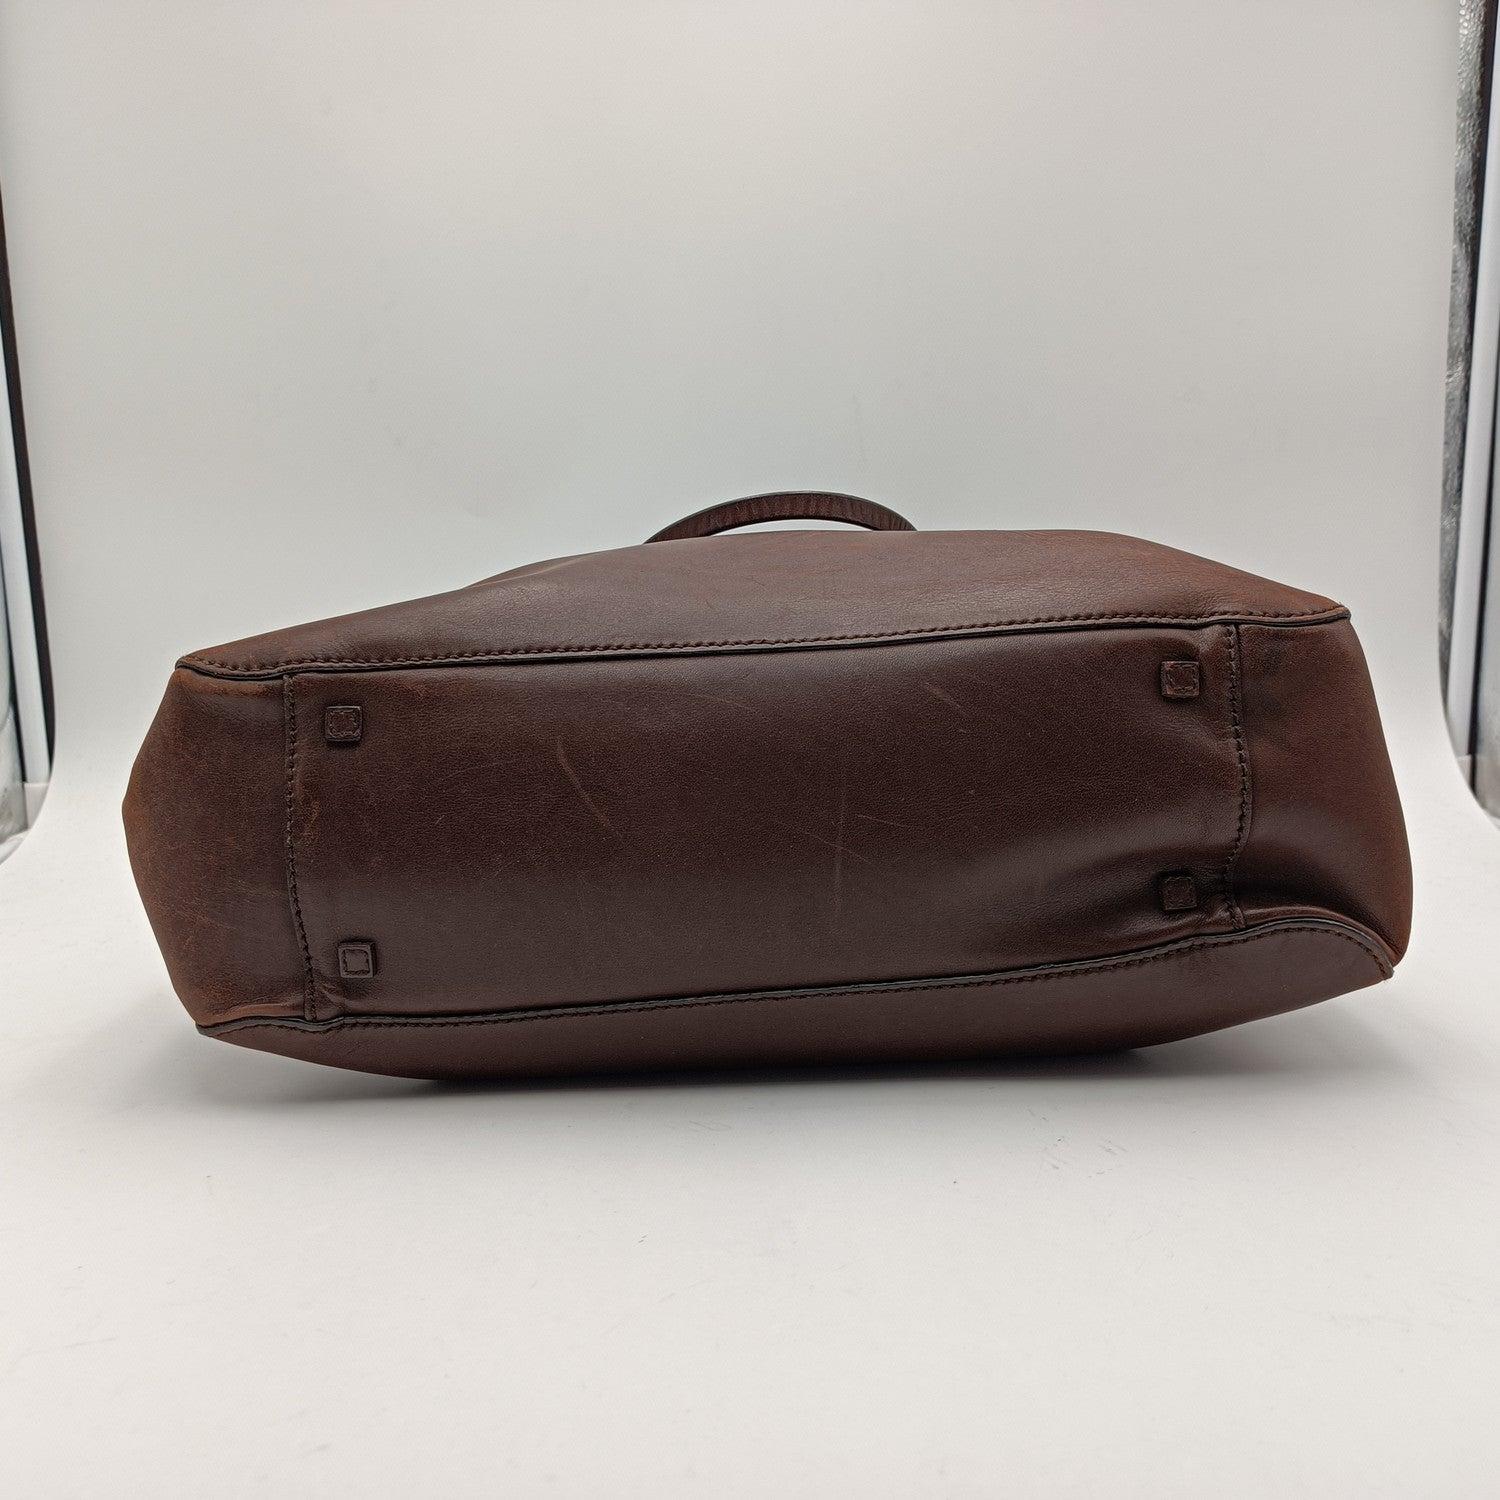 Gucci Brown Leather Tote Shopping Bag Handbag 2